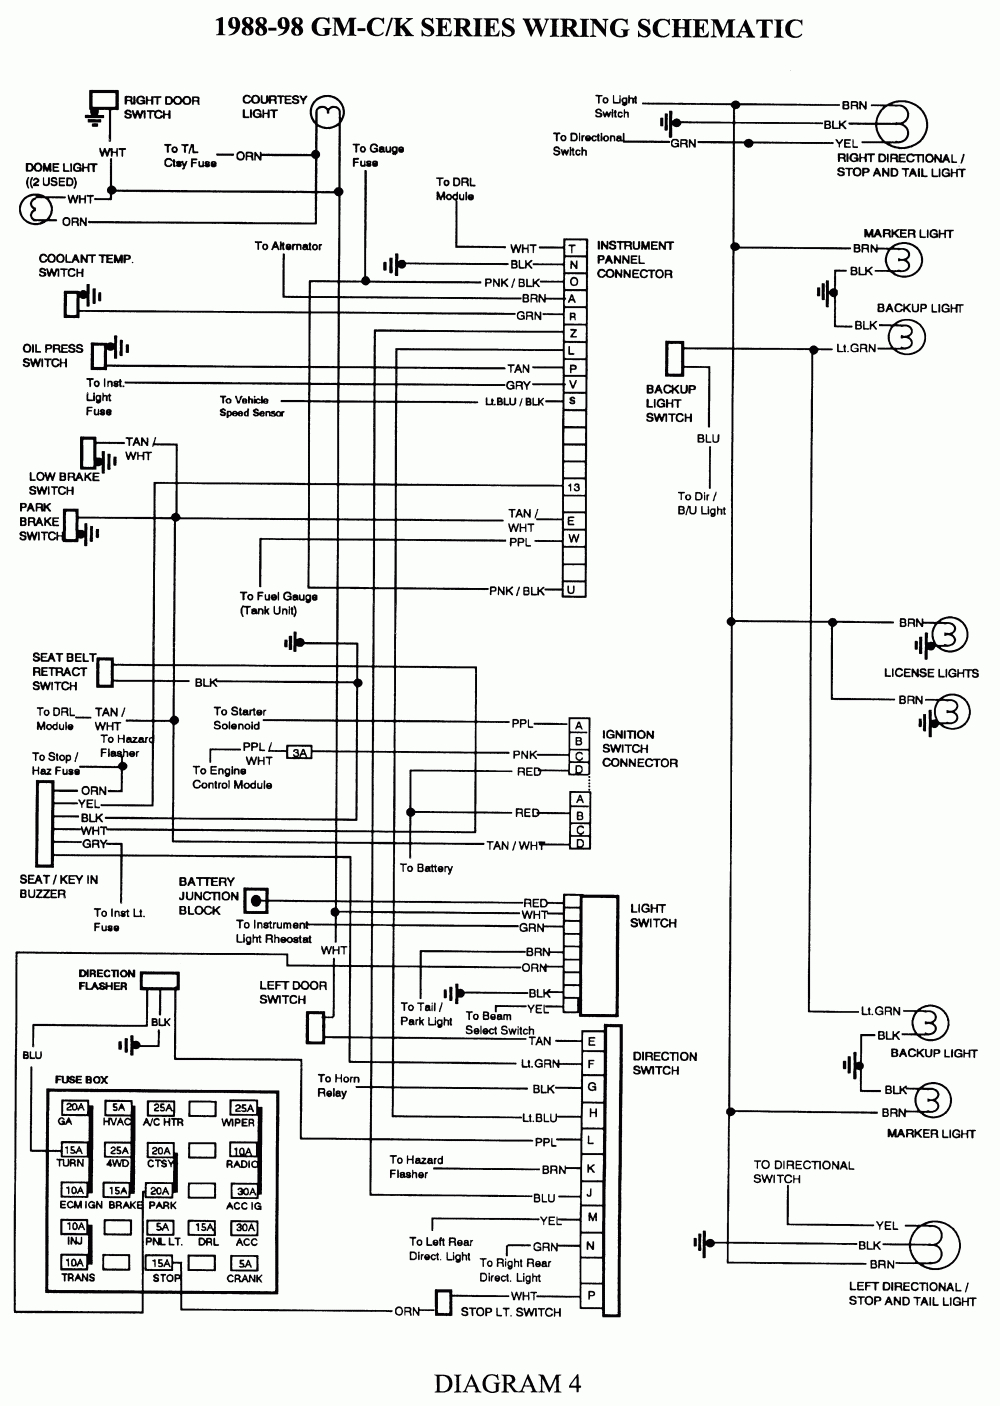 Chevy Silverado Wiring Harness Diagram | Wiring Diagram - Chevy Silverado Wiring Harness Diagram